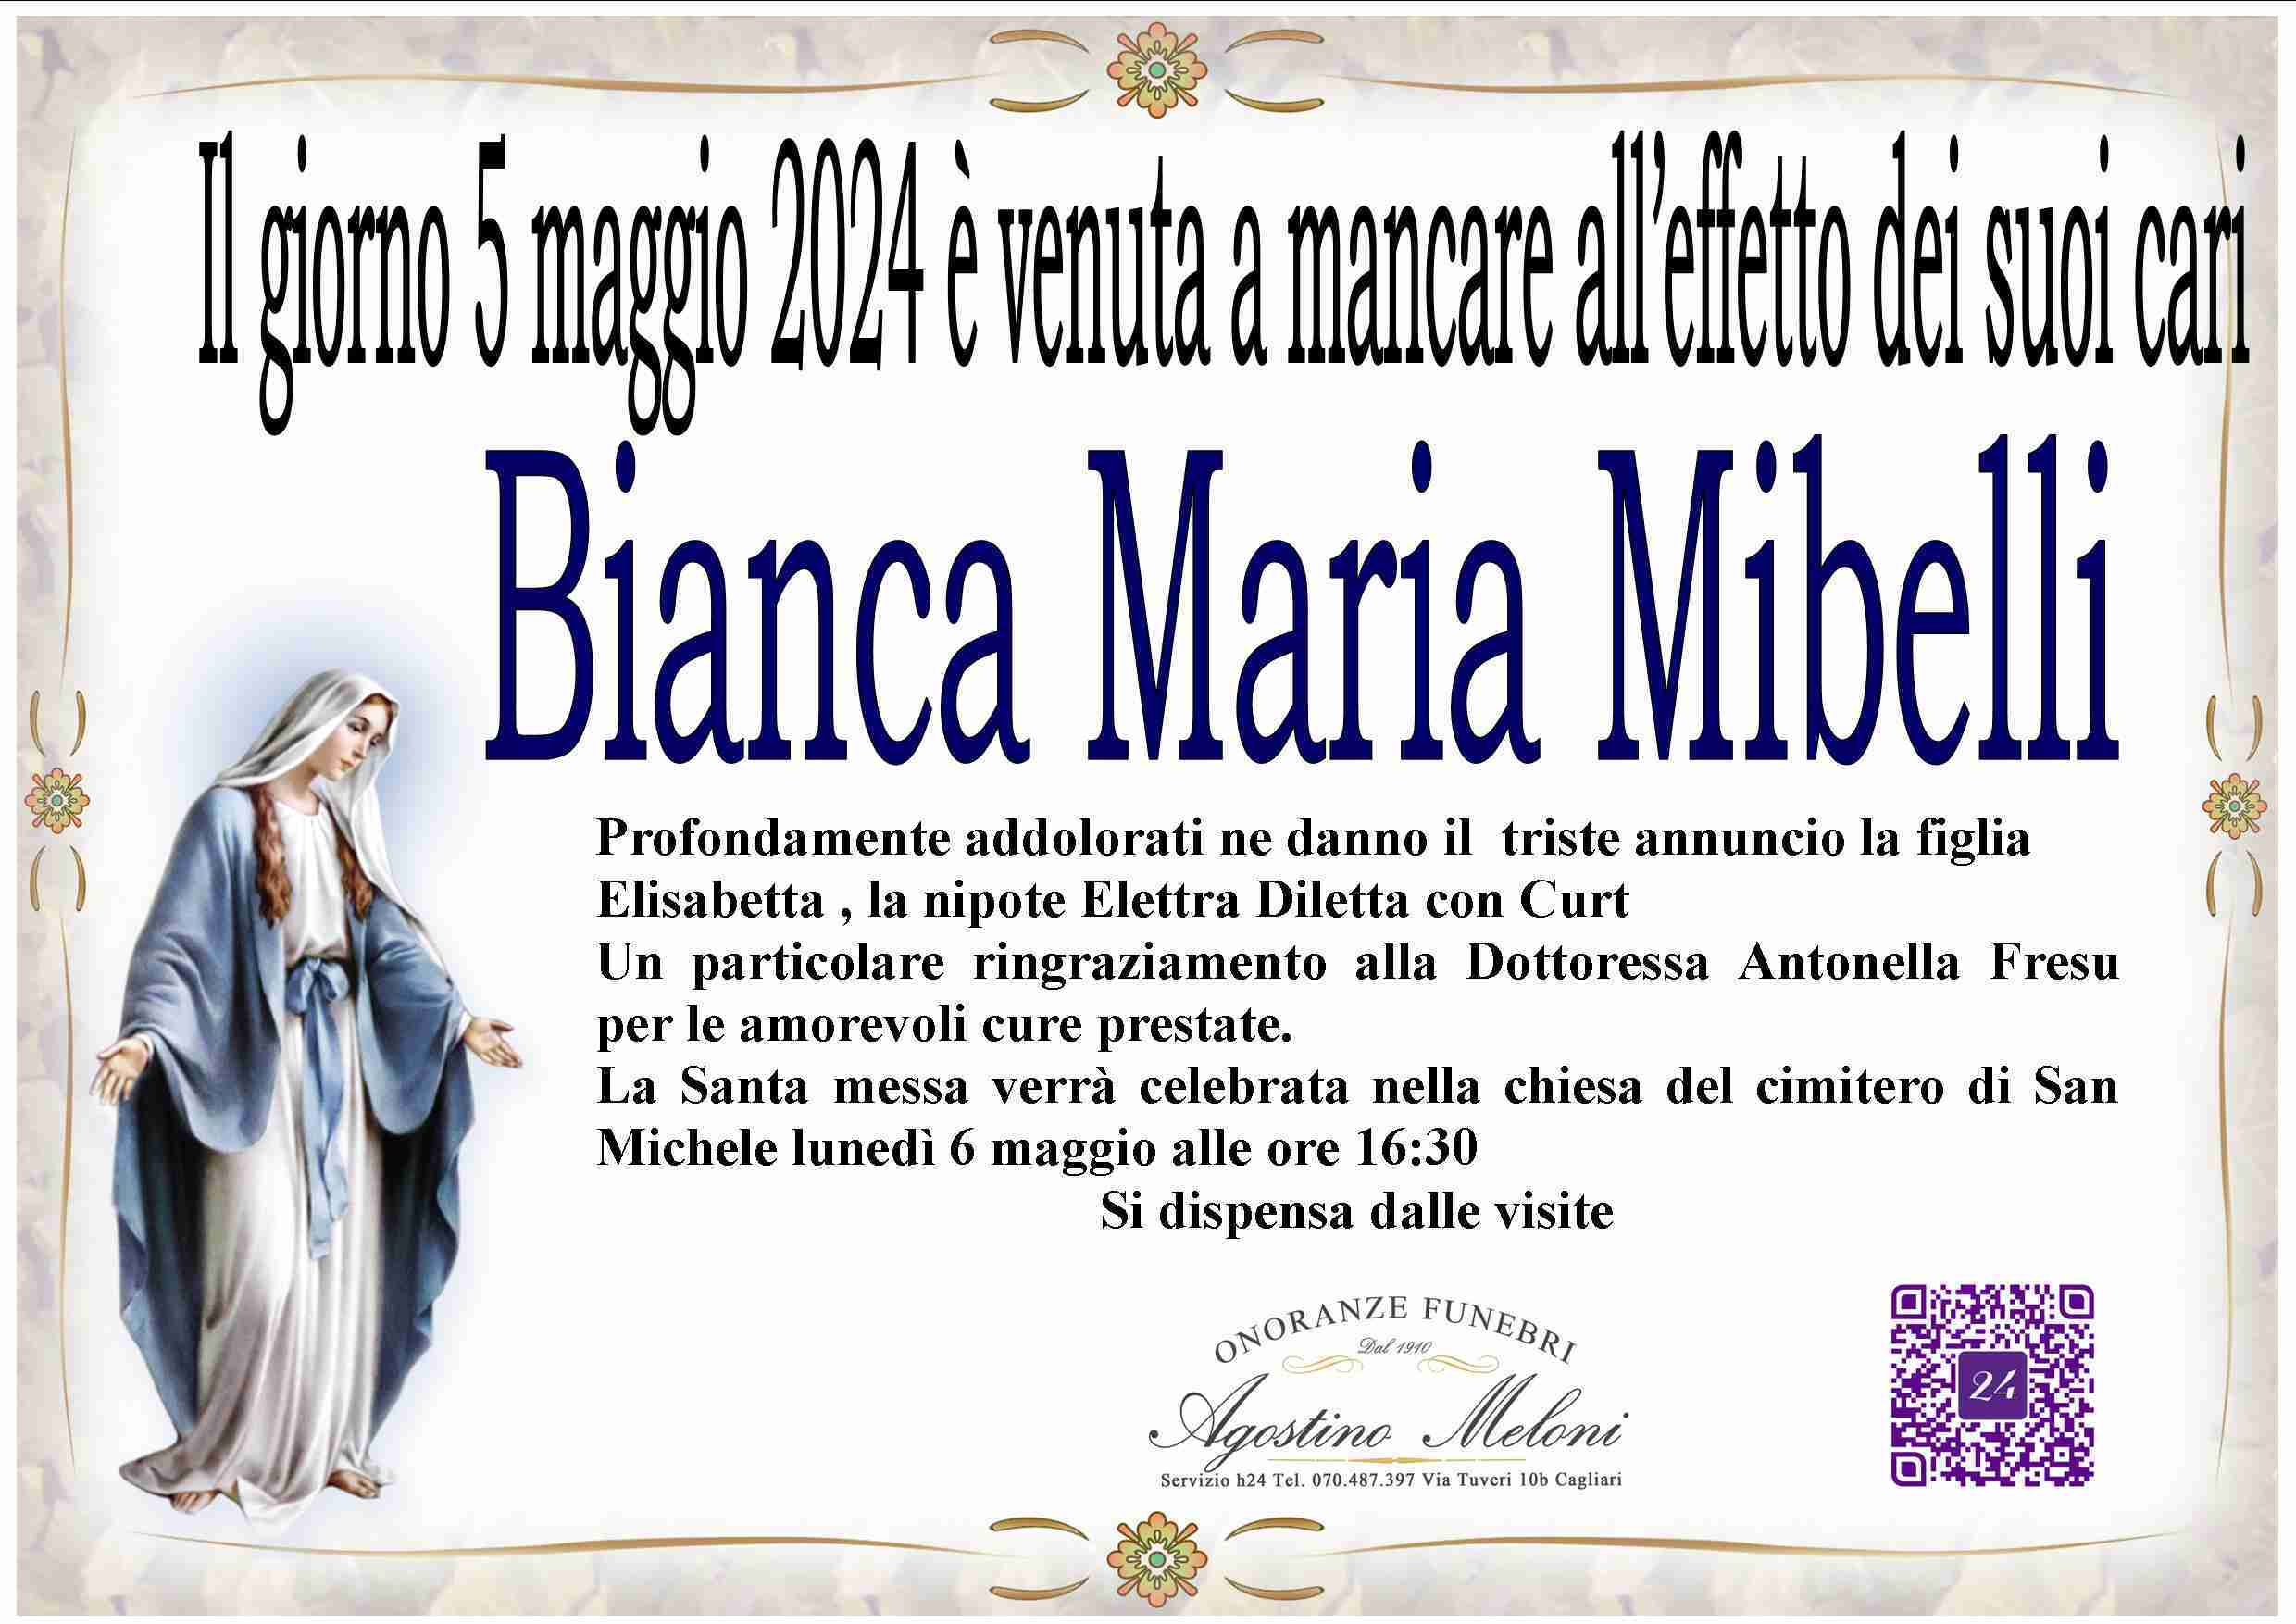 Bianca Maria Mibelli